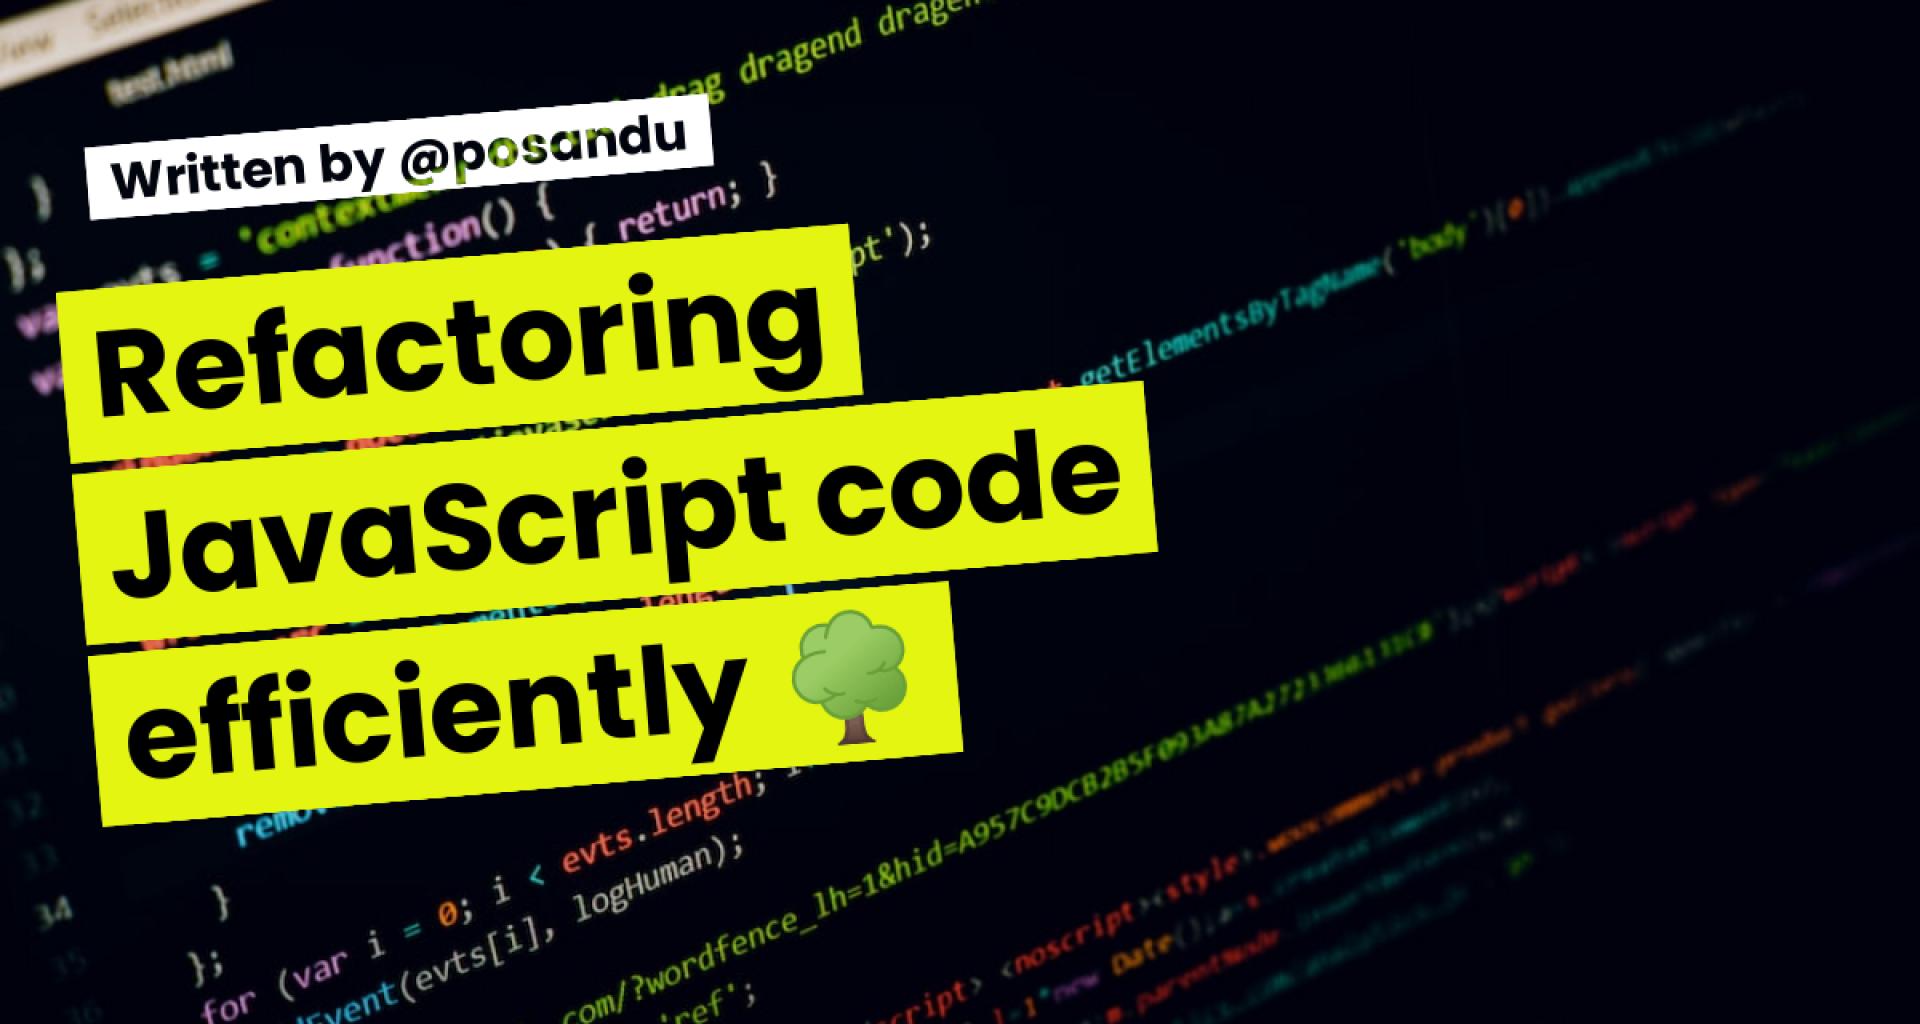 Refactoring JavaScript code efficiently 🌳